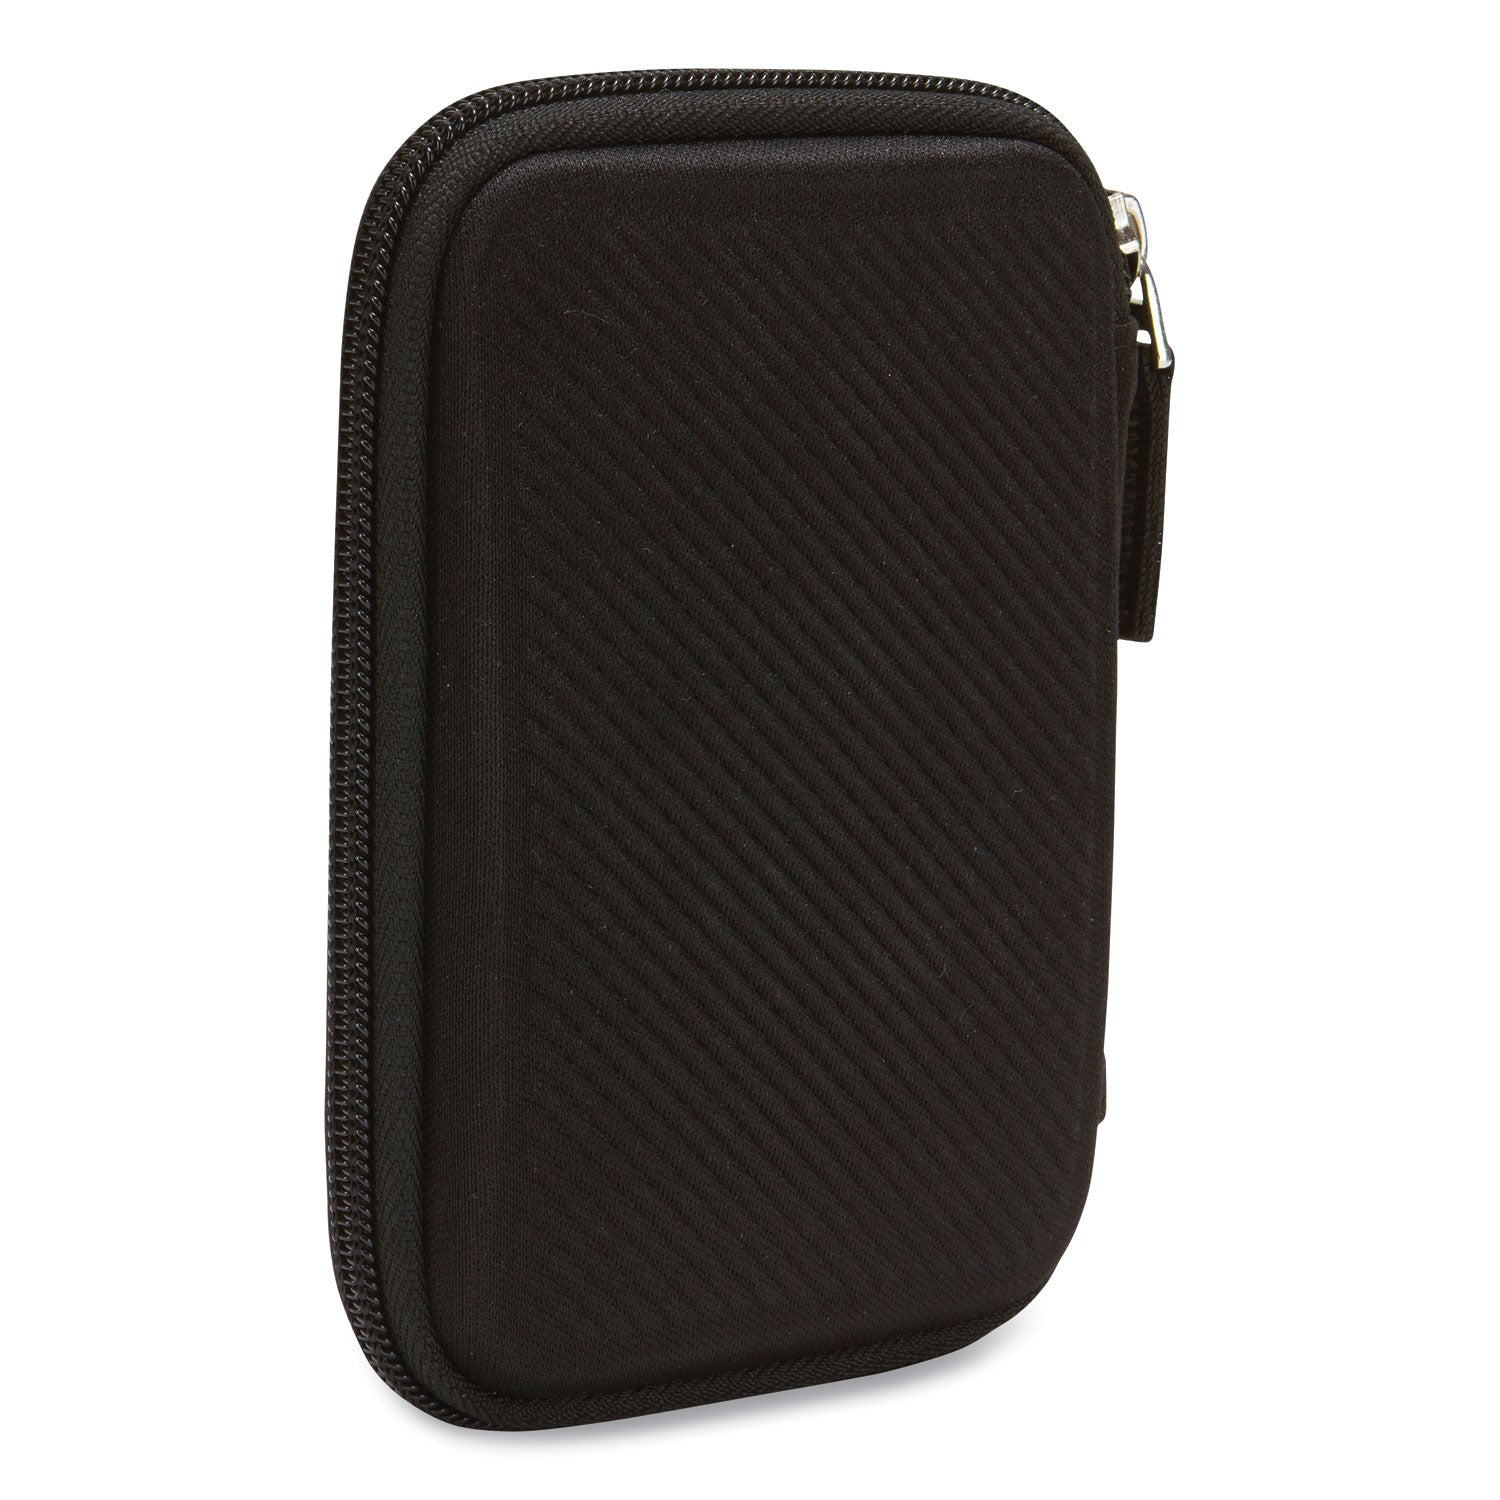 portable-hard-drive-case-molded-eva-black_clg3201314 - 3